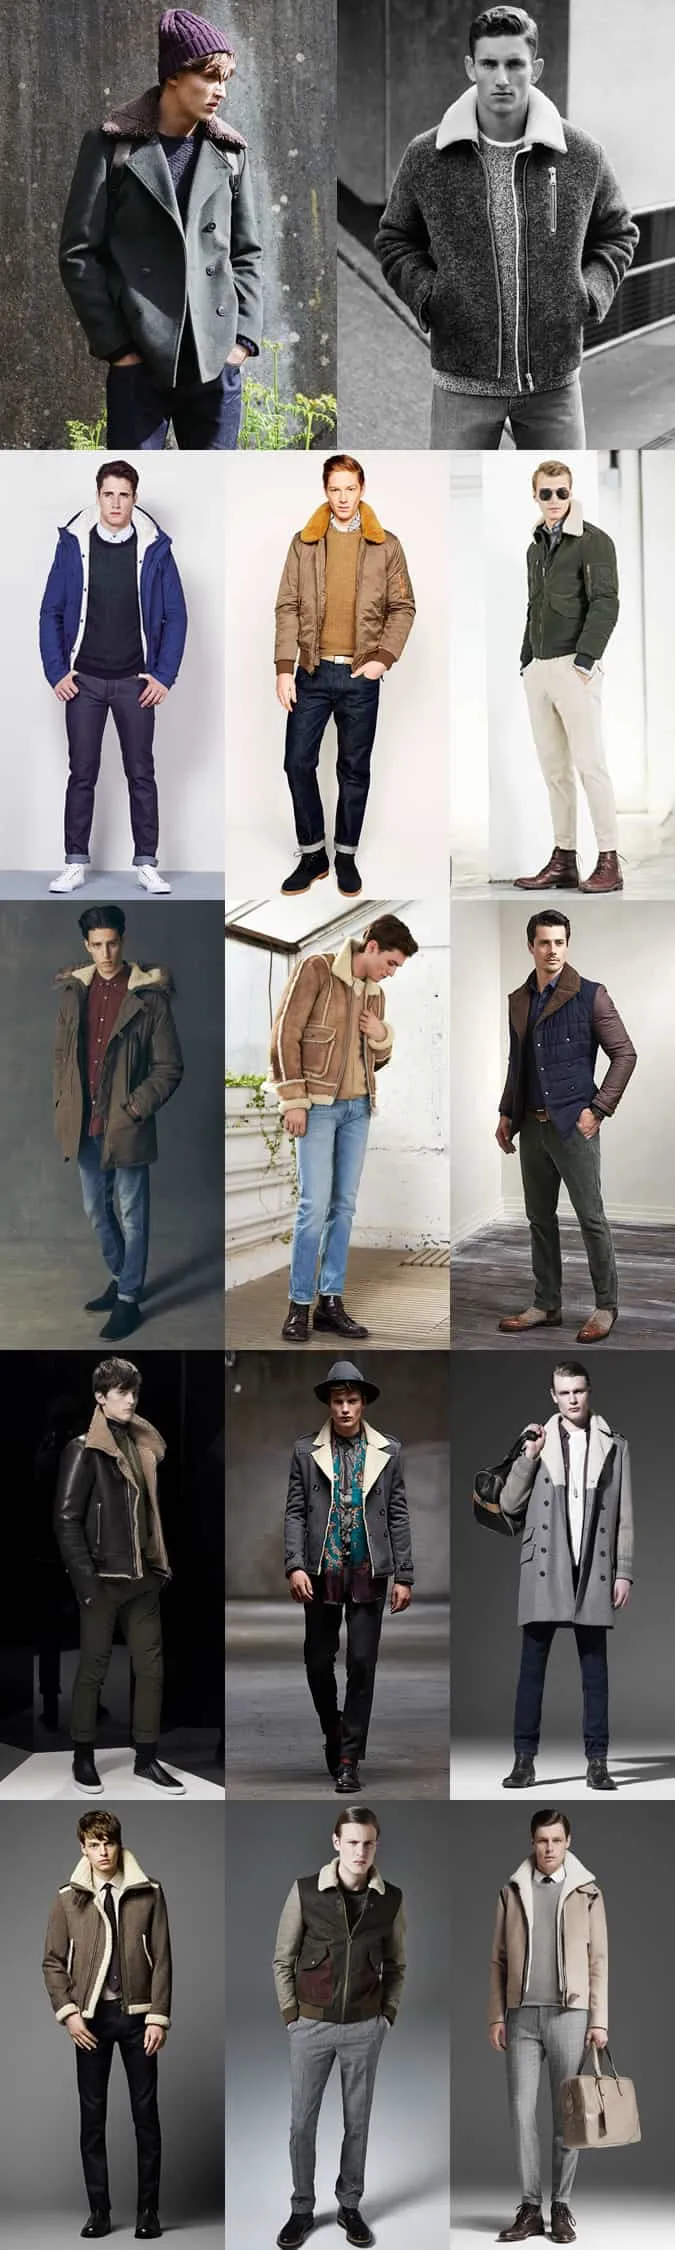 Lookbook inspiration inspiration jackets & coats cho nam